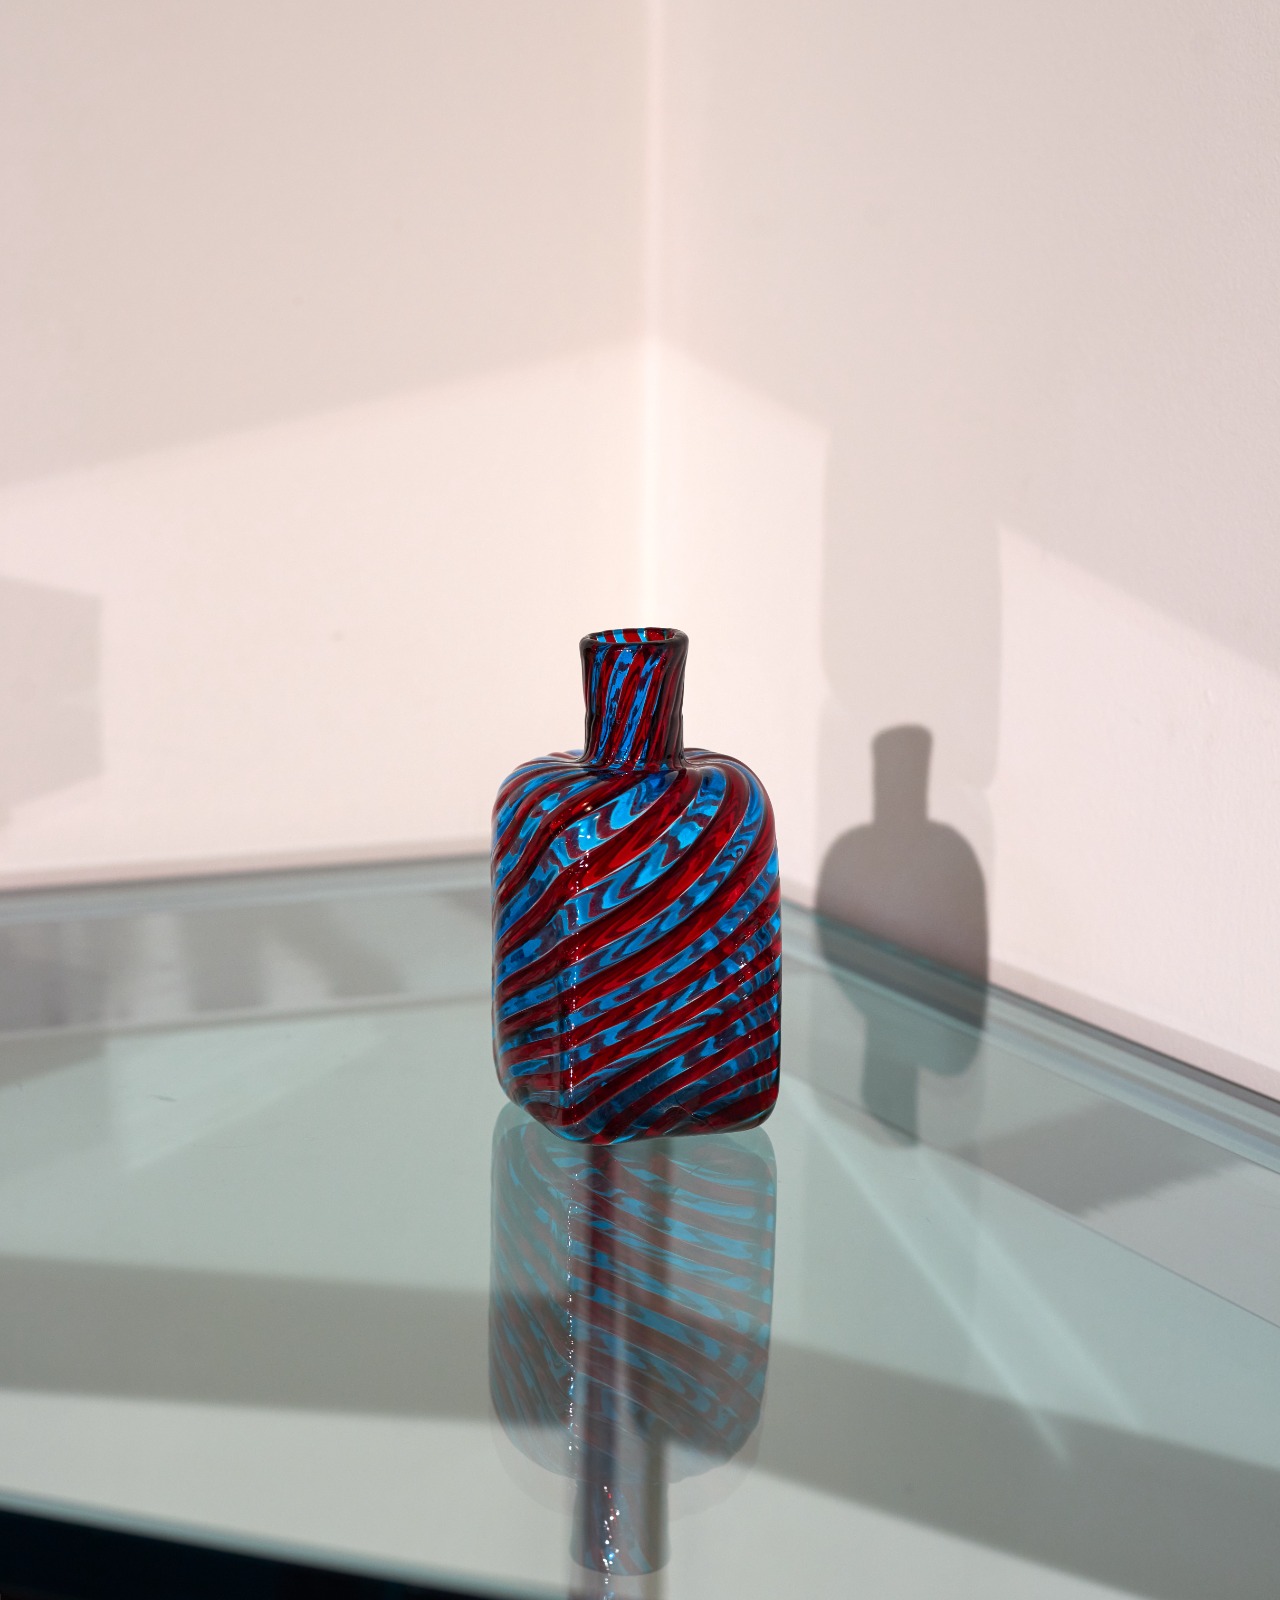 Morandiana series bottle in Murano glass